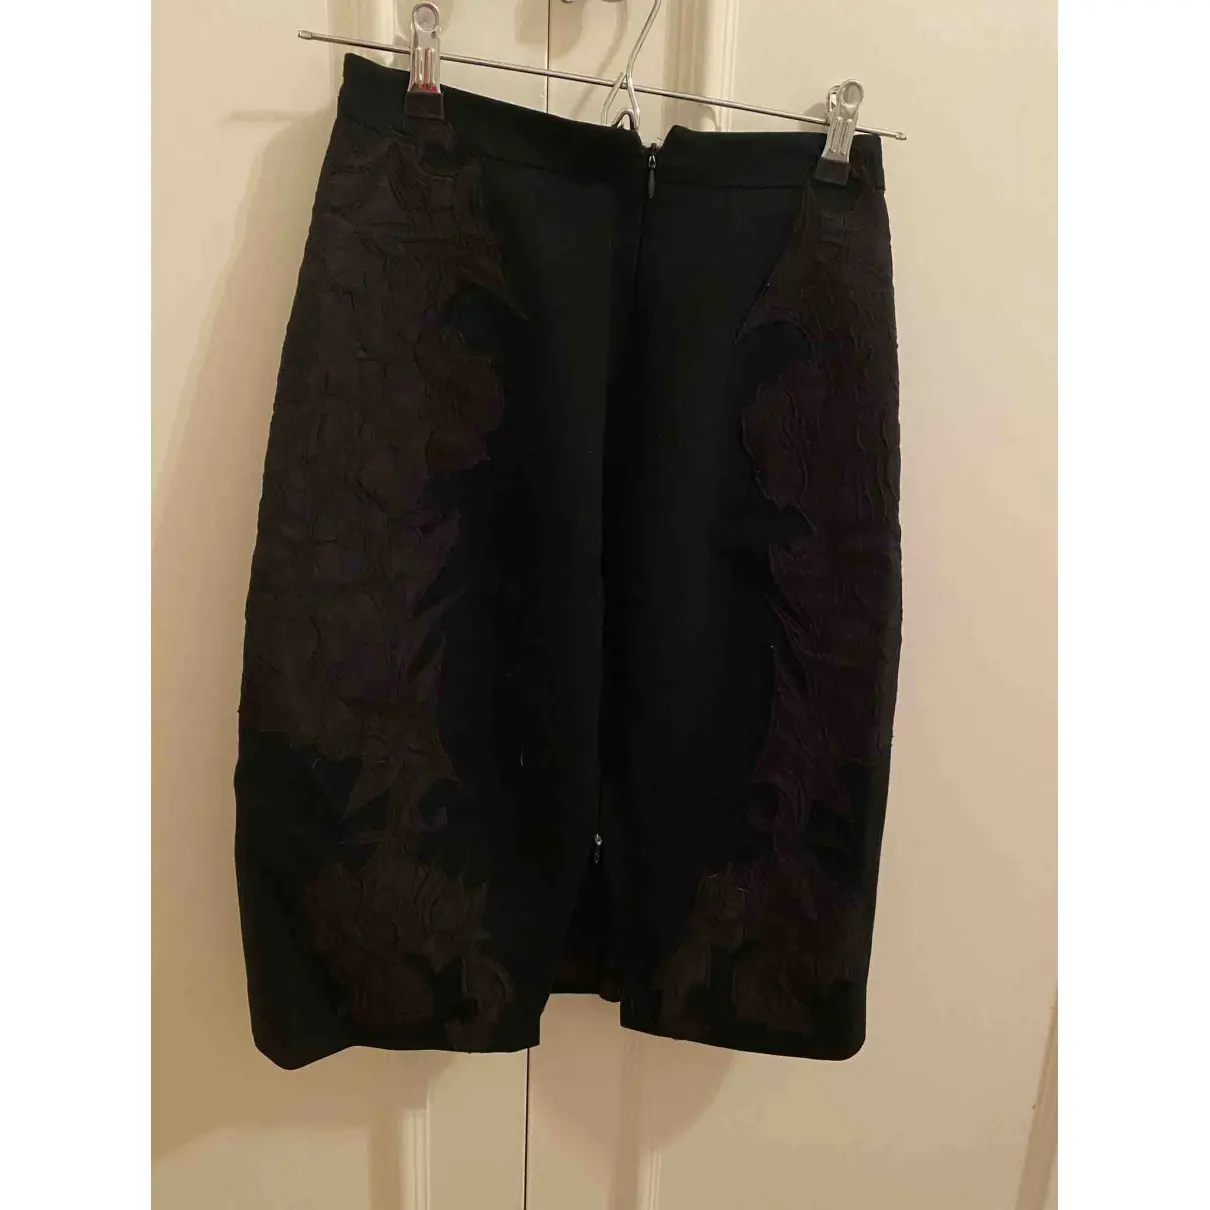 Buy Elie Tahari Mid-length skirt online